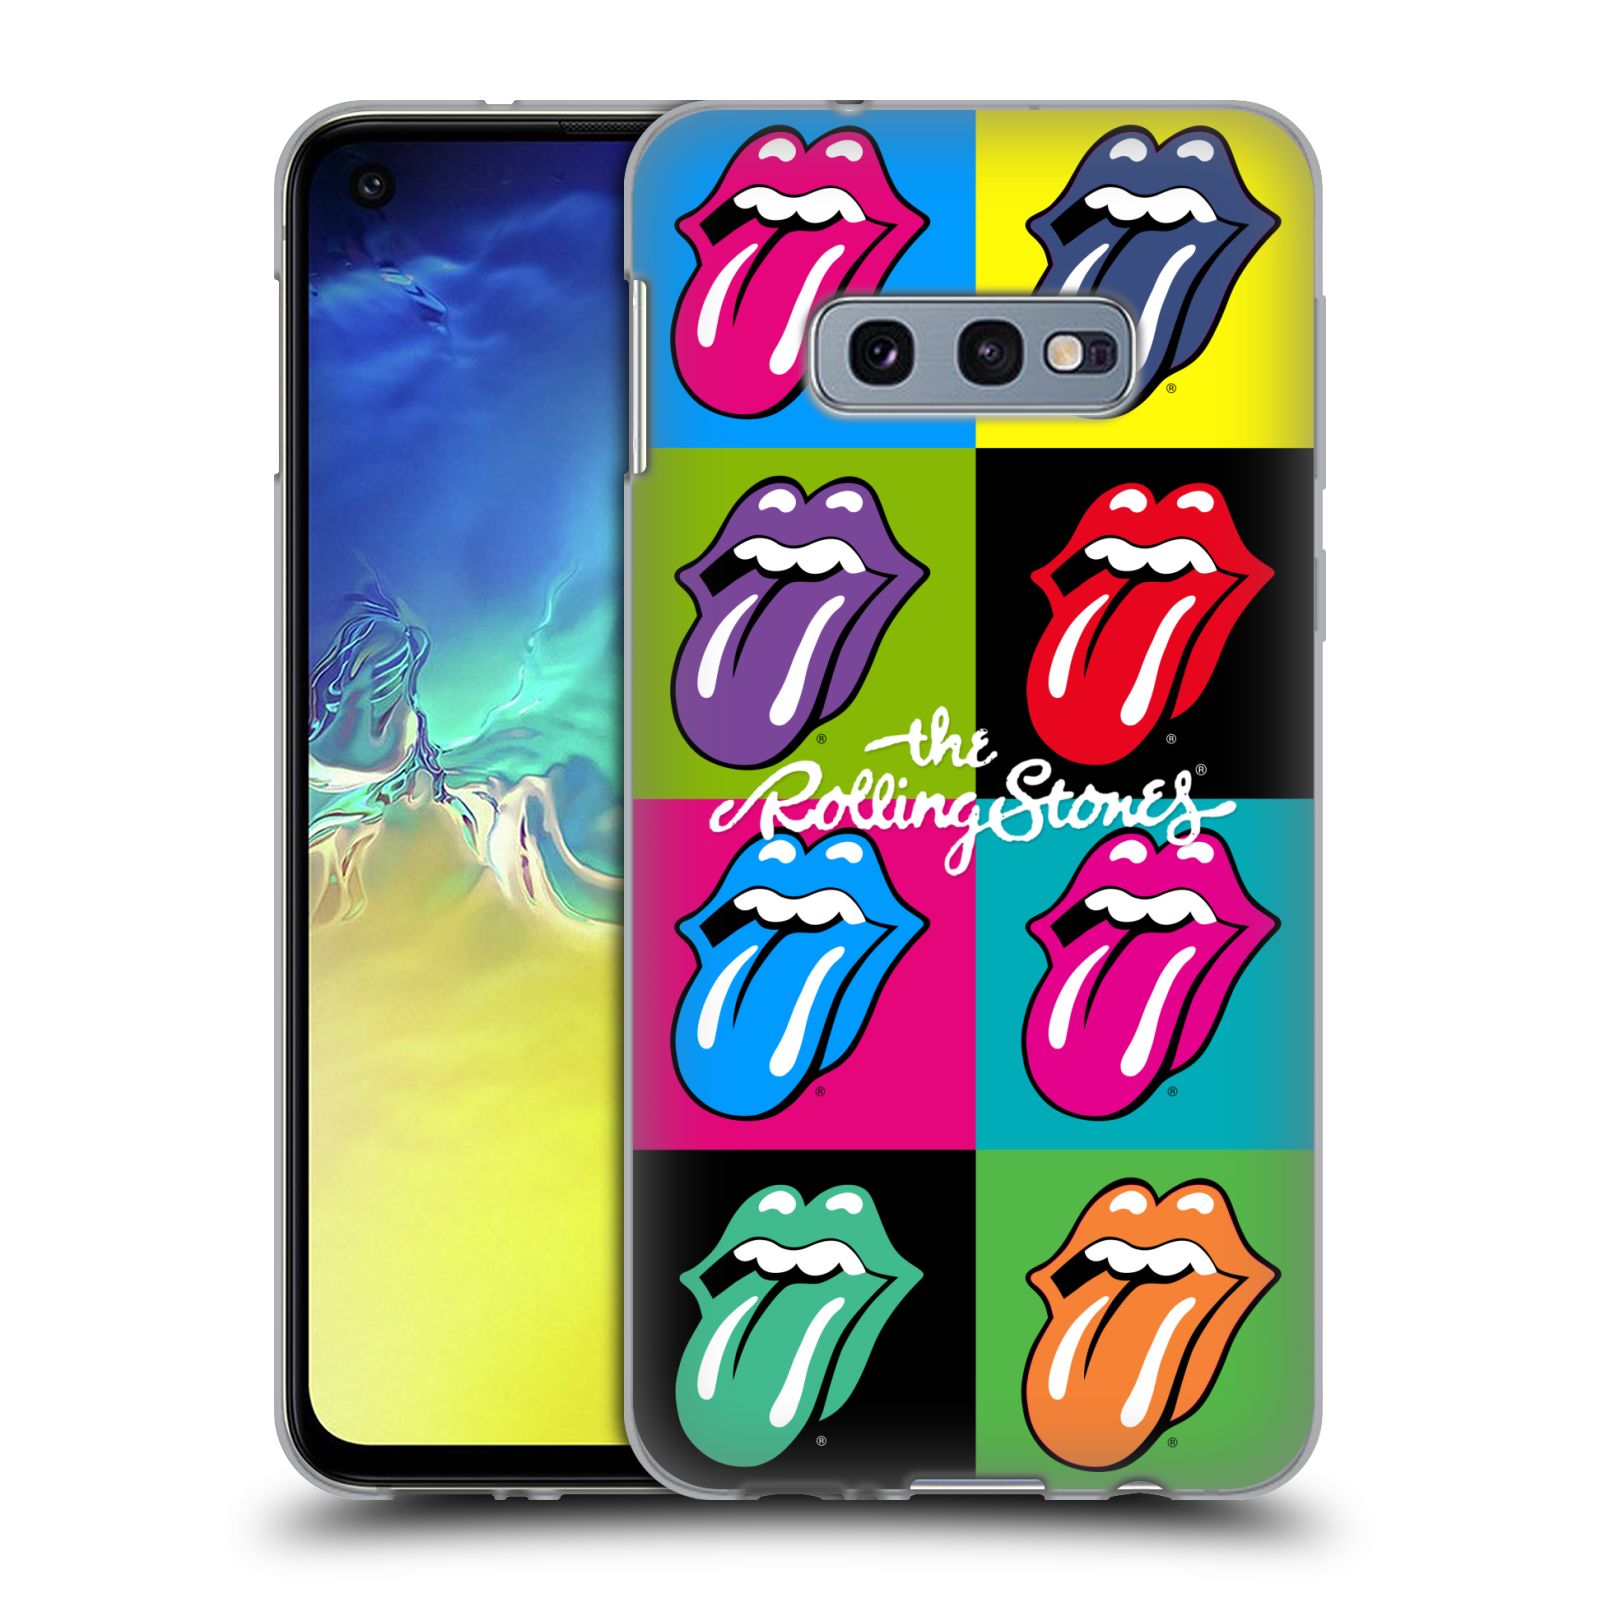 Silikonové pouzdro na mobil Samsung Galaxy S10e - Head Case - The Rolling Stones - Pop Art Vyplazené Jazyky (Silikonový kryt, obal, pouzdro na mobilní telefon Samsung Galaxy S10e SM-G970 s motivem The Rolling Stones - Pop Art Vyplazené Jazyky)